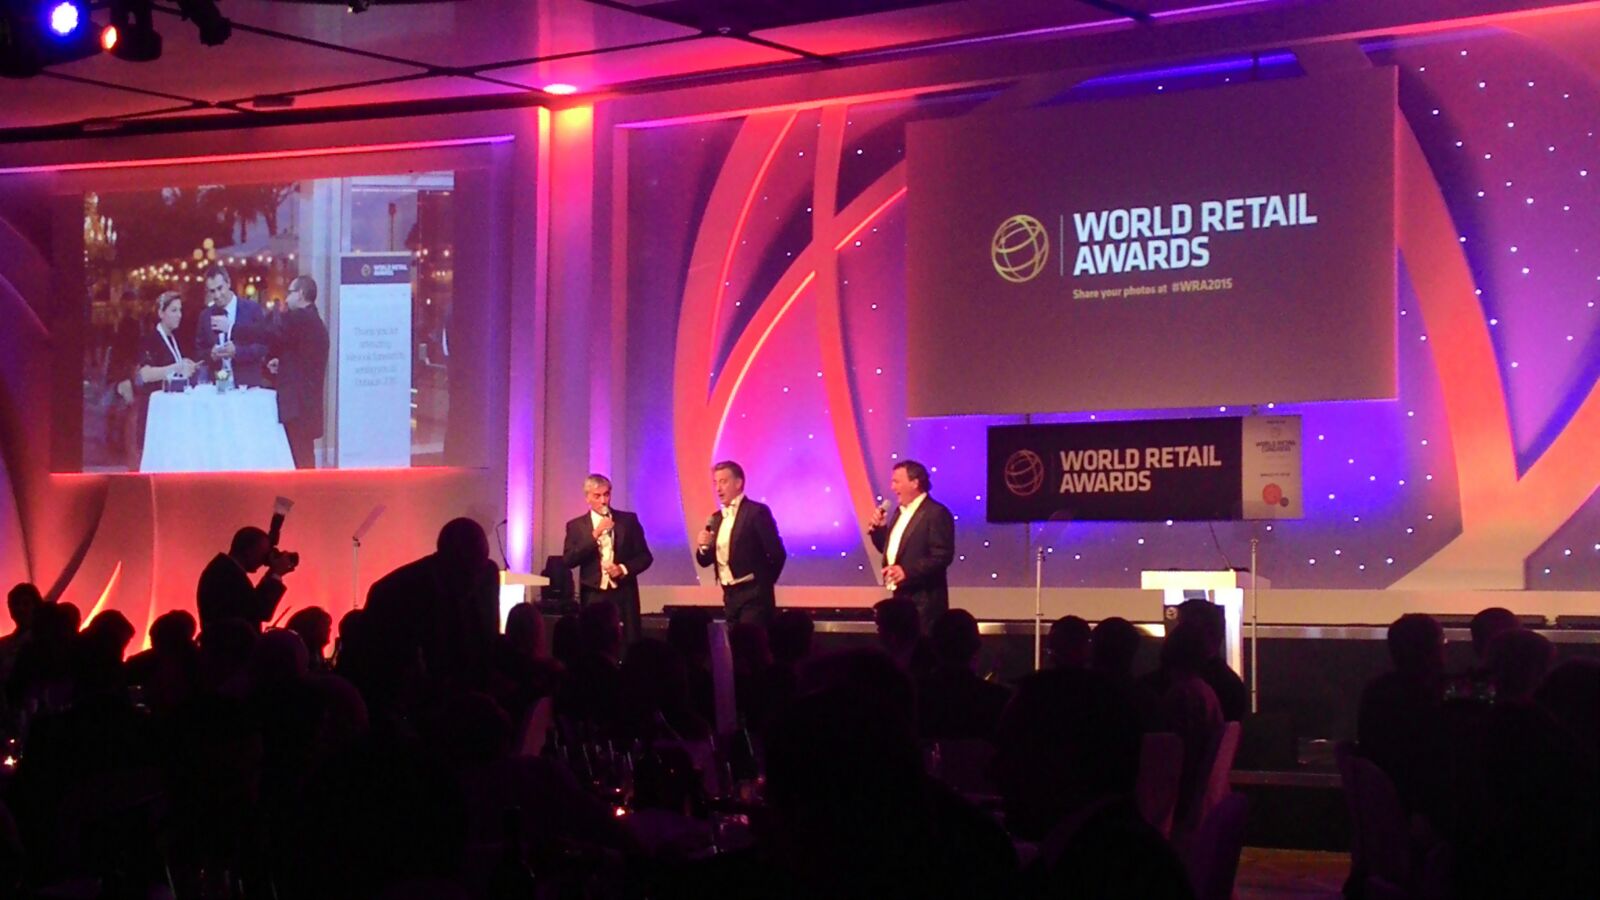 Poi, World Retail Awards 2015’te finalist olarak yer aldı!